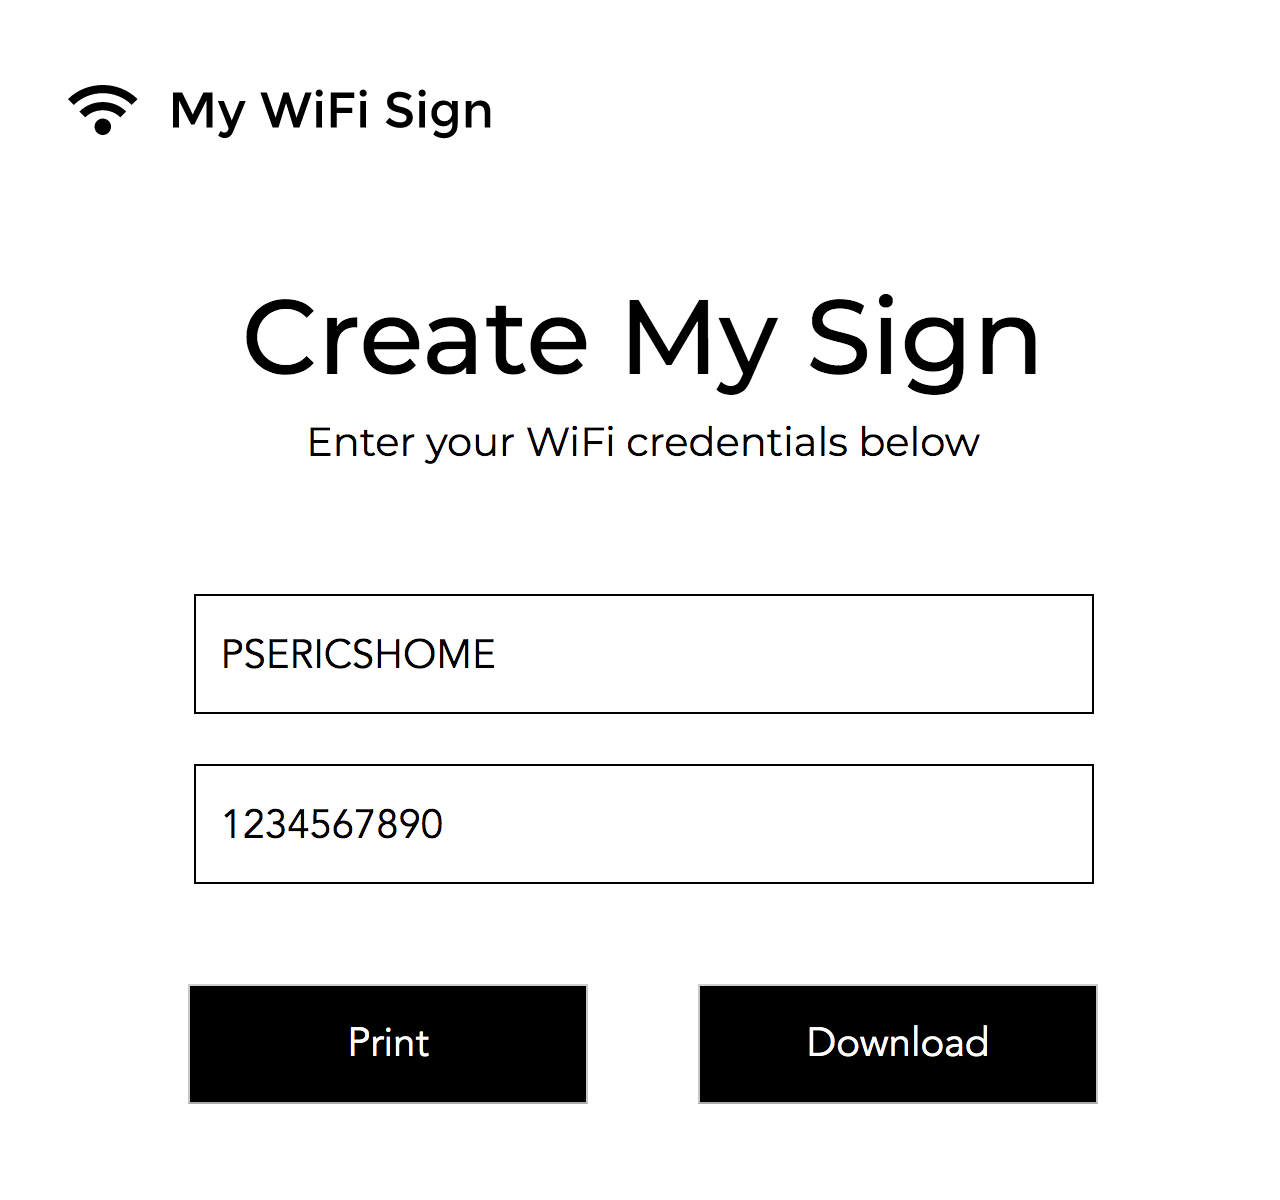 My WiFi Sign